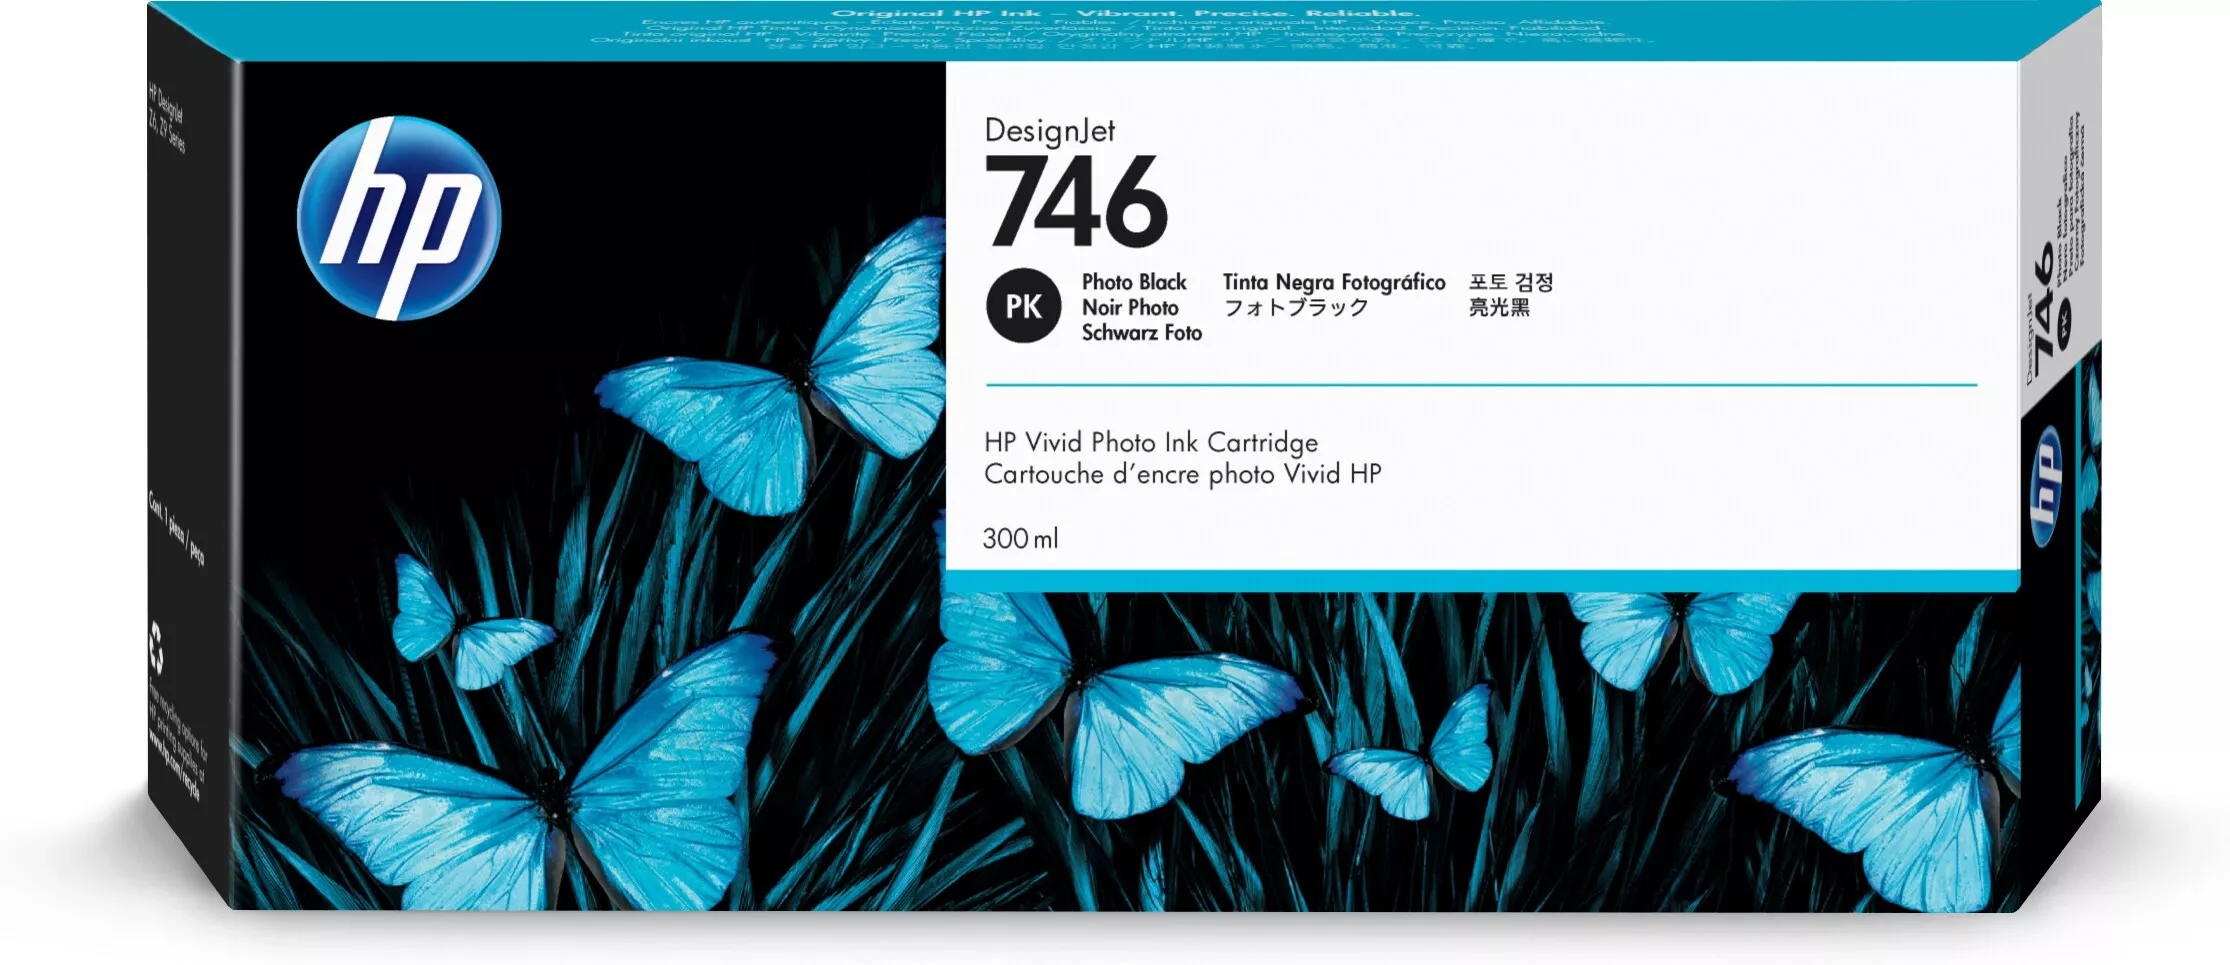 Vente HP 746 300-ml Photo Black Ink Cartridge HP au meilleur prix - visuel 2